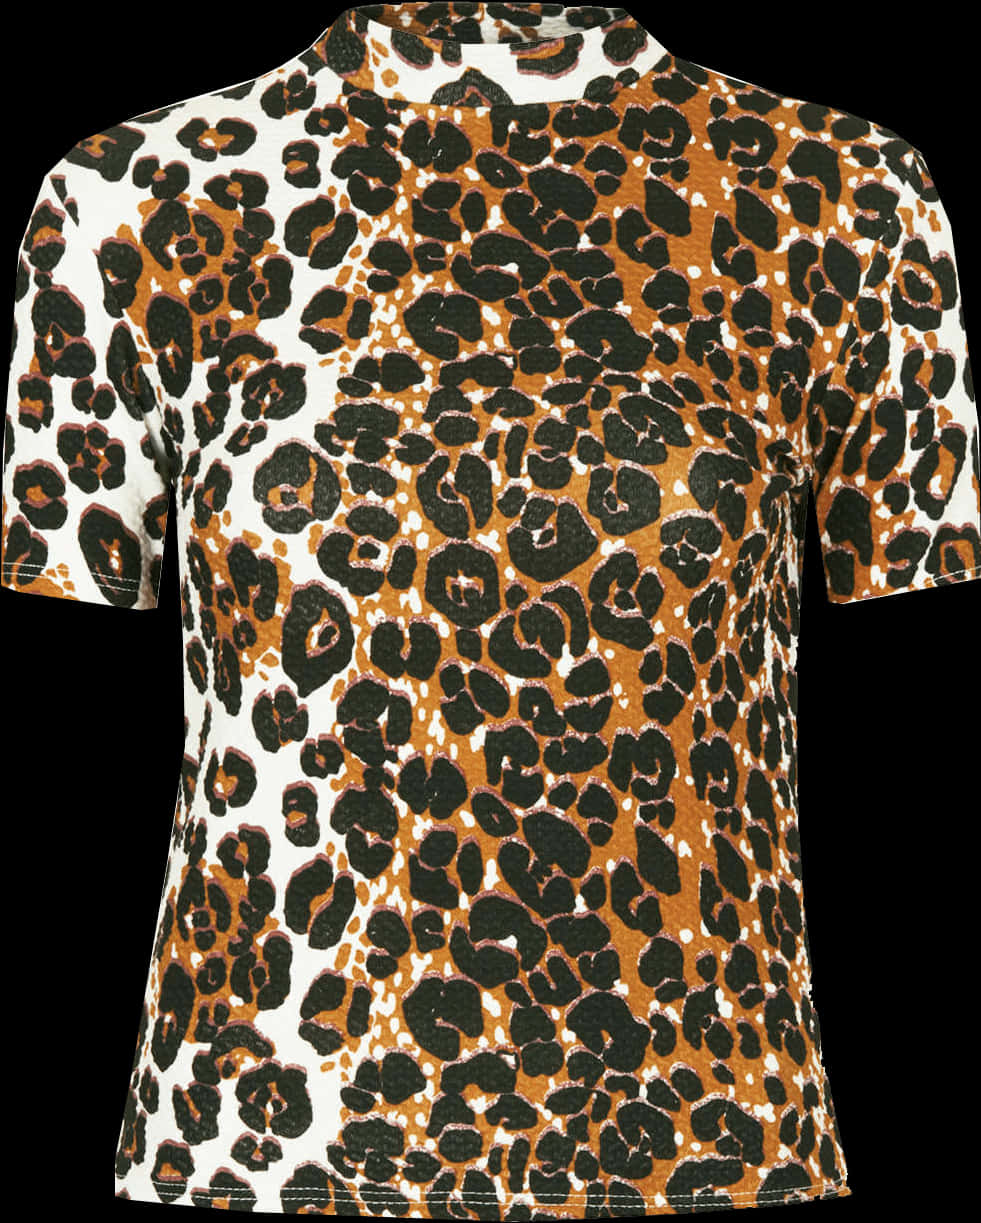 Cheetah Print T Shirt Design PNG